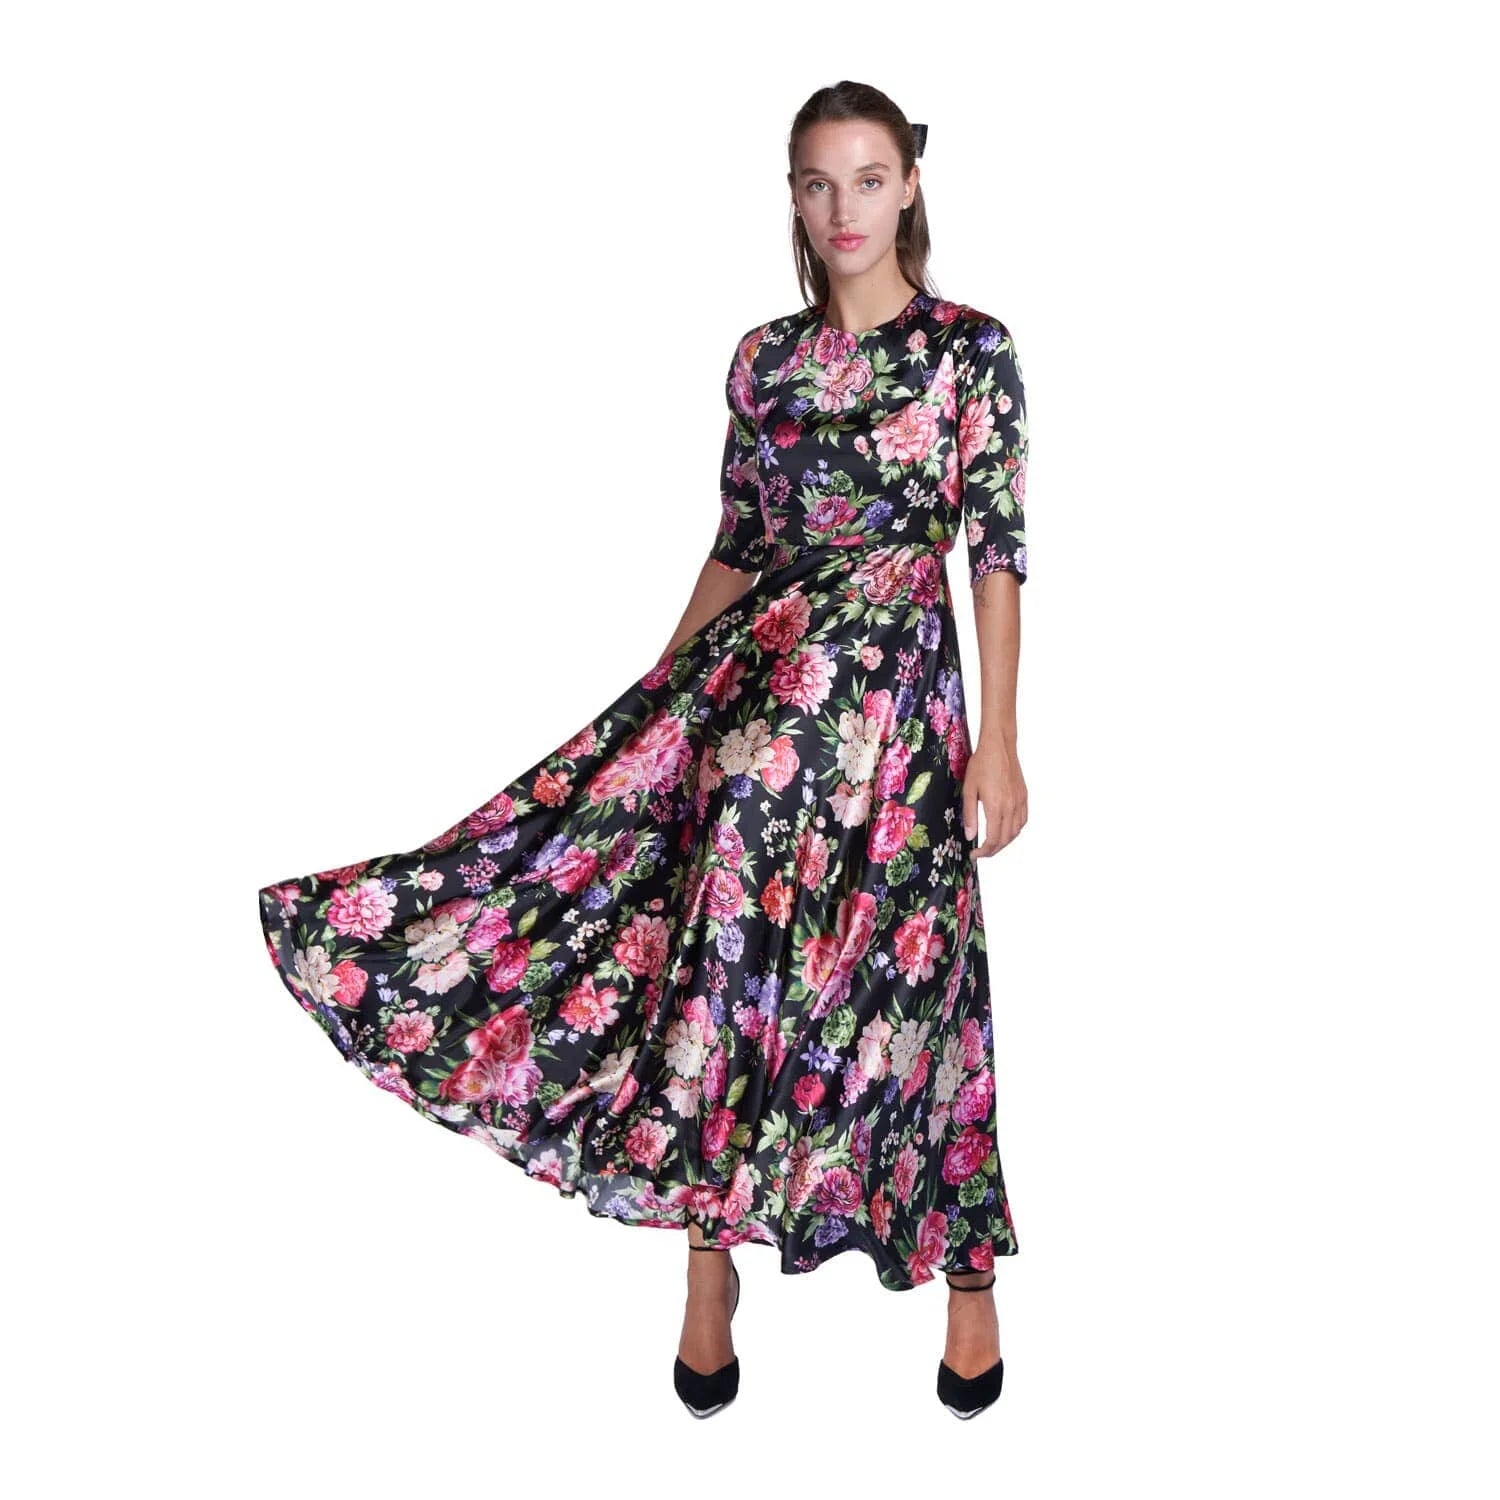 Floral print satin dress - Dress